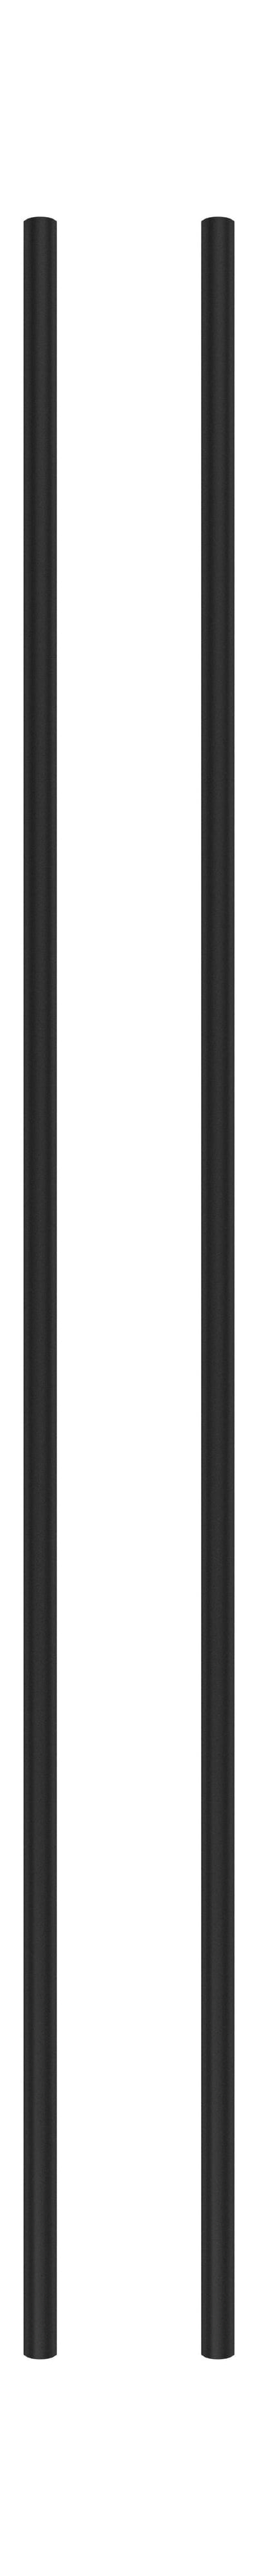 Moebe Shelving System/Wall Shelving Leg 115 Cm Black, Set Of 2